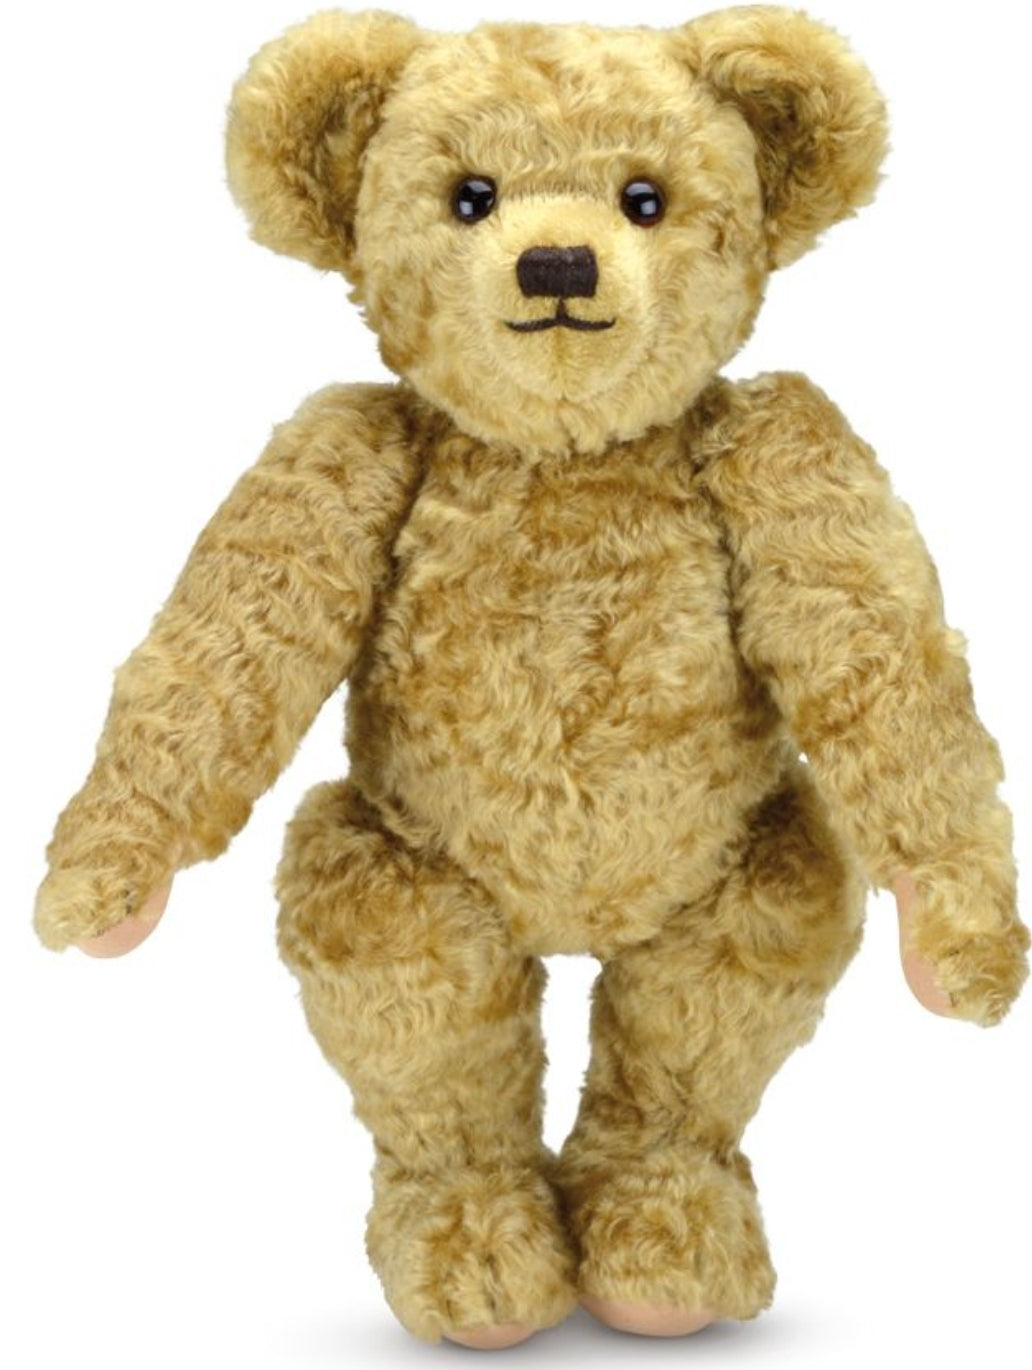 Edward - 18" Christopher Robin's Teddy Bear by Merrythought